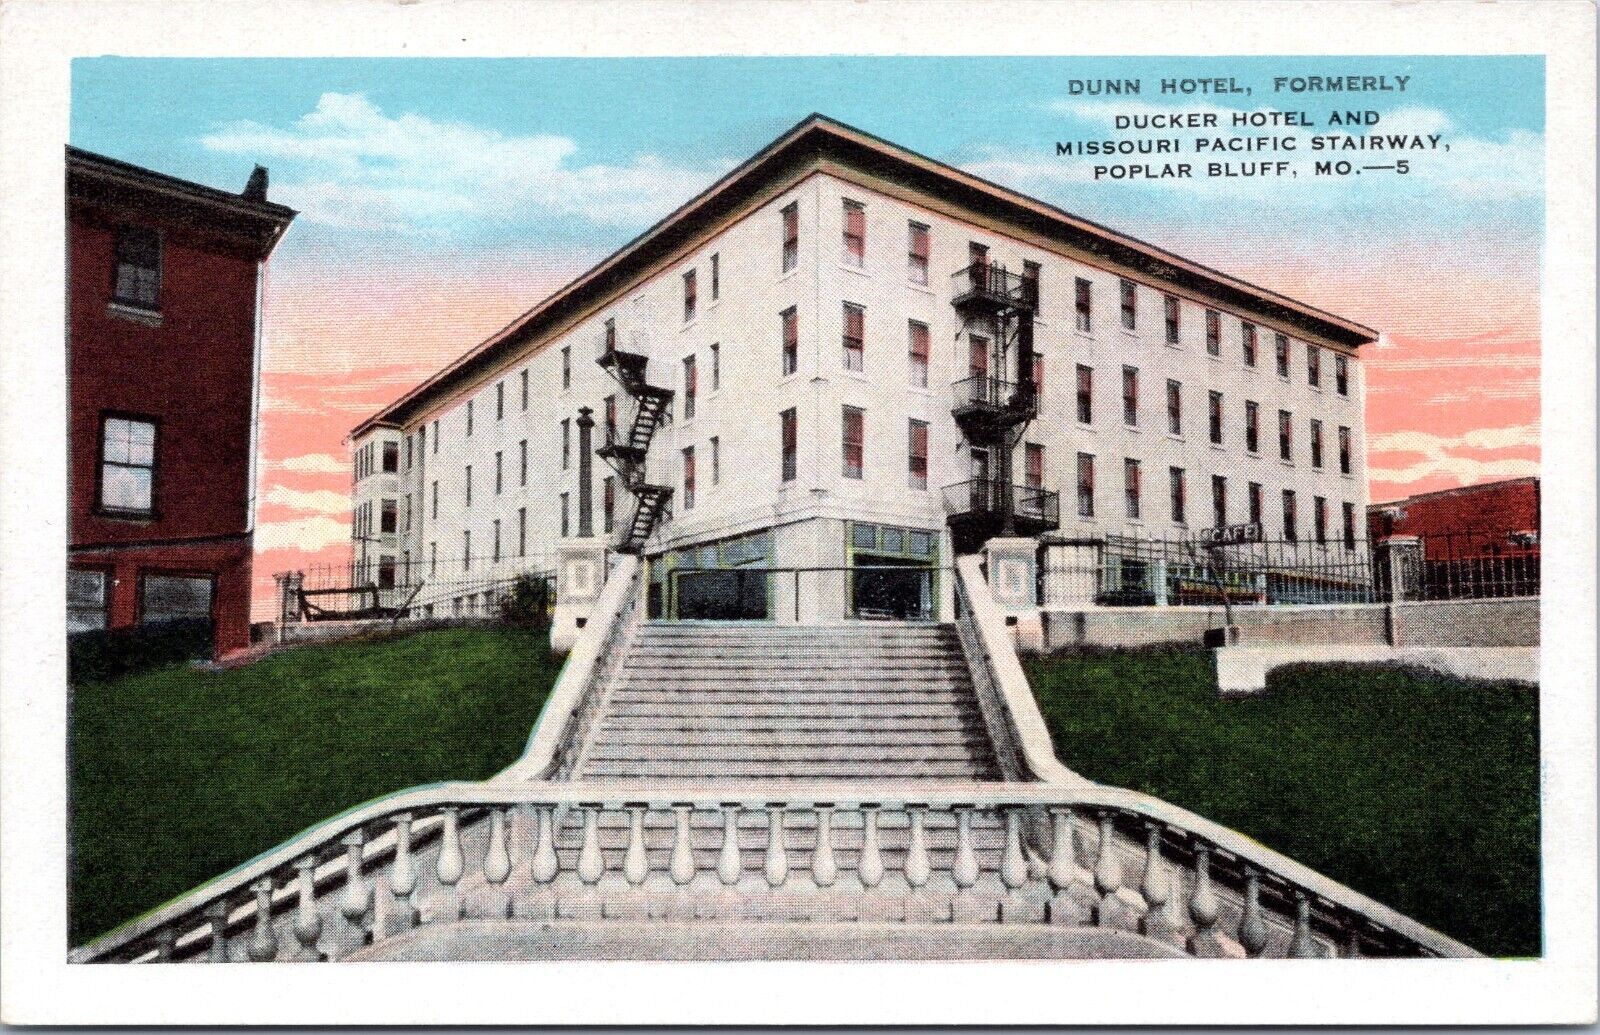 Dunn Hotel, former Ducker Hotel, Poplar Bluff, Missouri - Vintage w/b Postcard